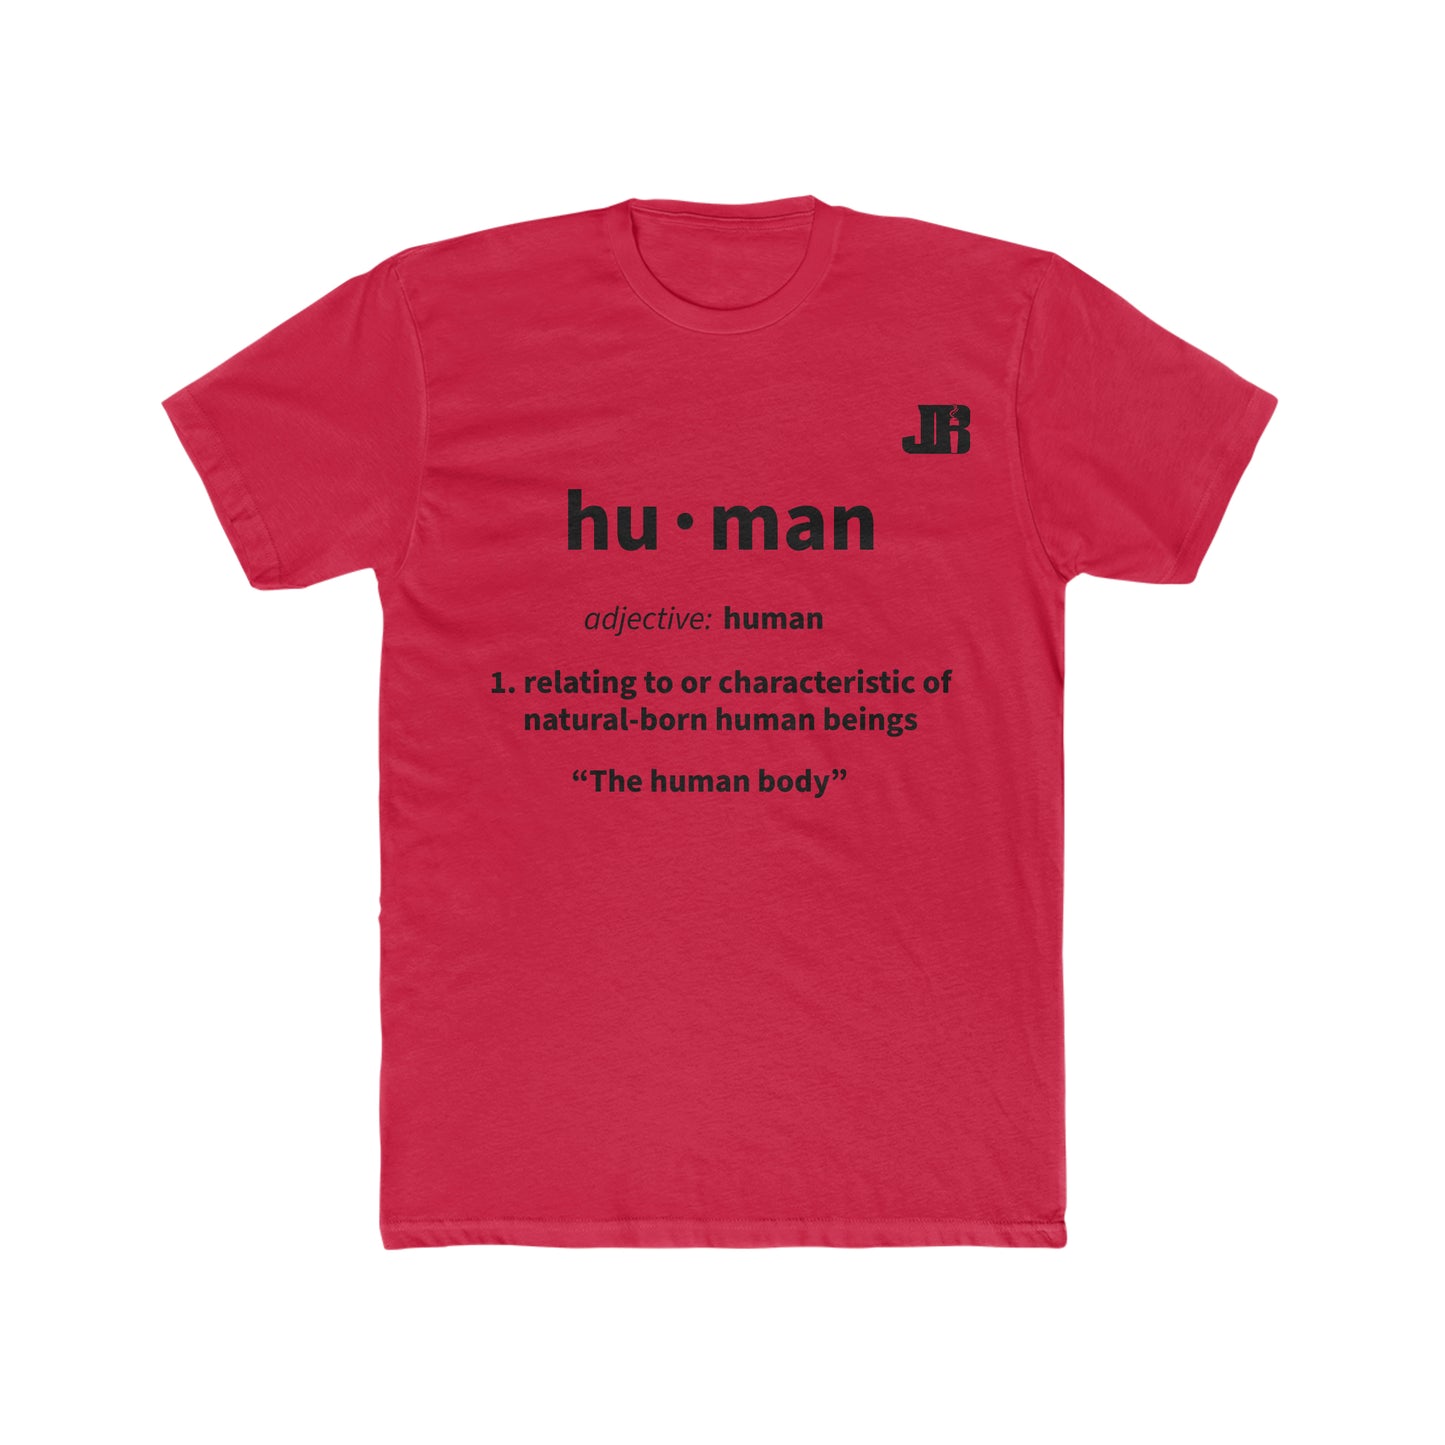 Human Definition Shirt